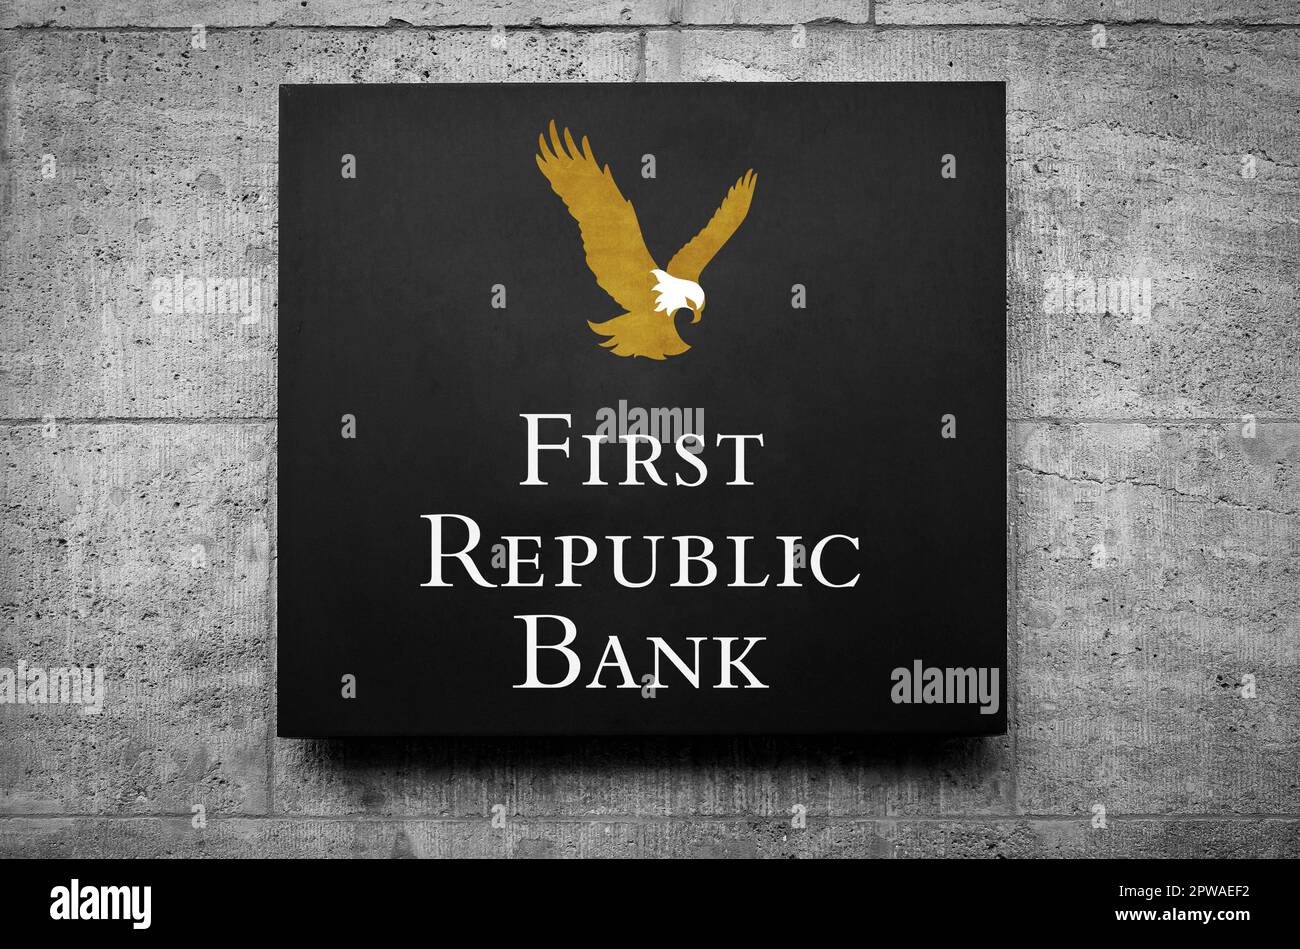 First Republic Bank Stock Photo